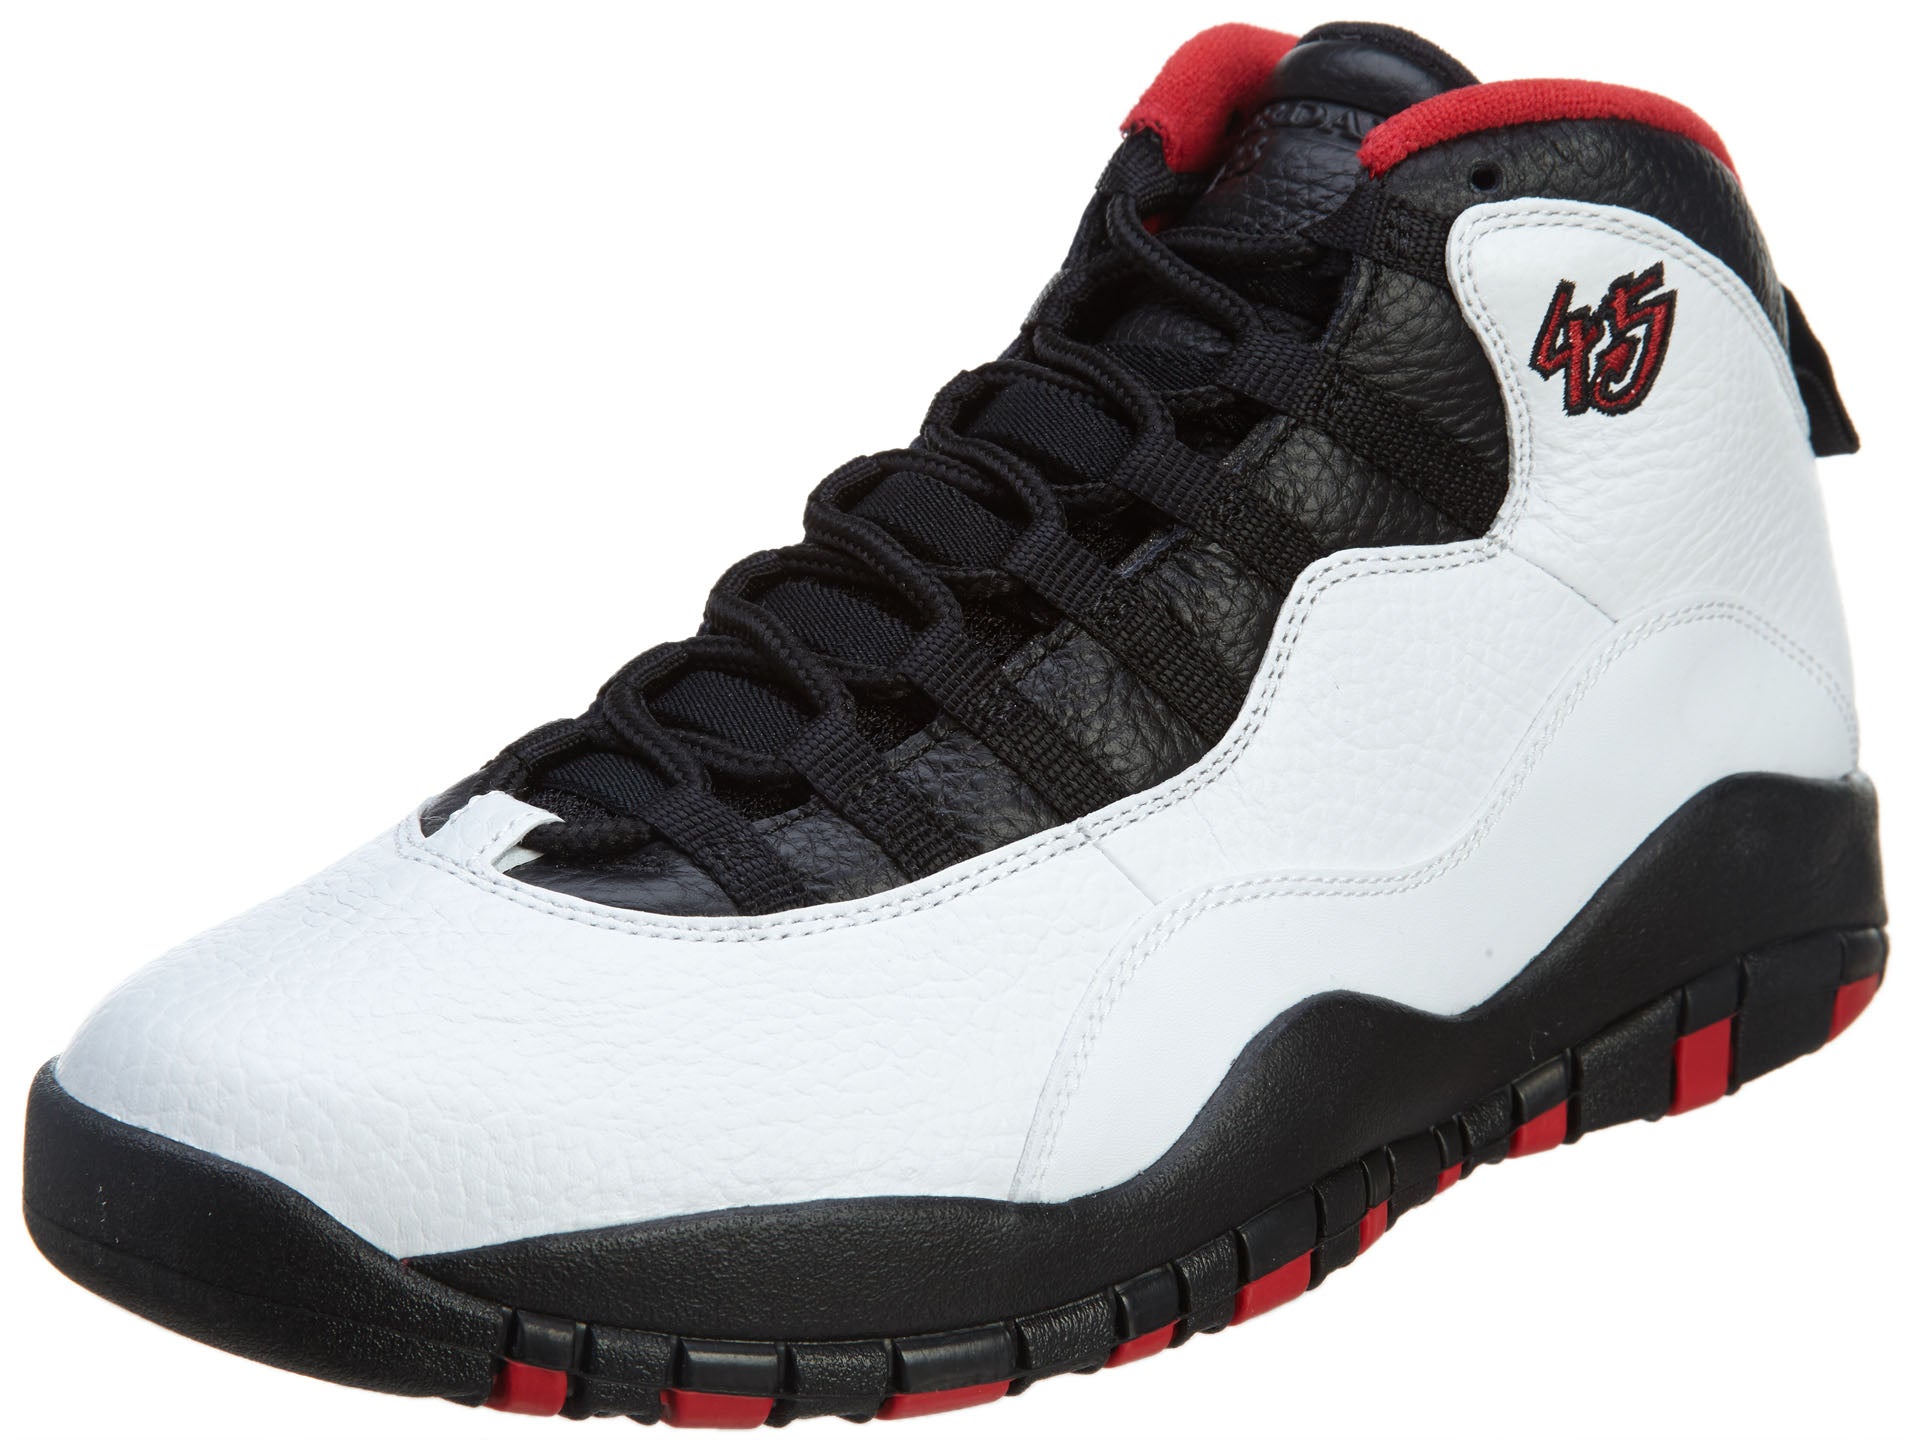 Air Jordan 10 Retro Basketball Shoes Men's Style #310805-102